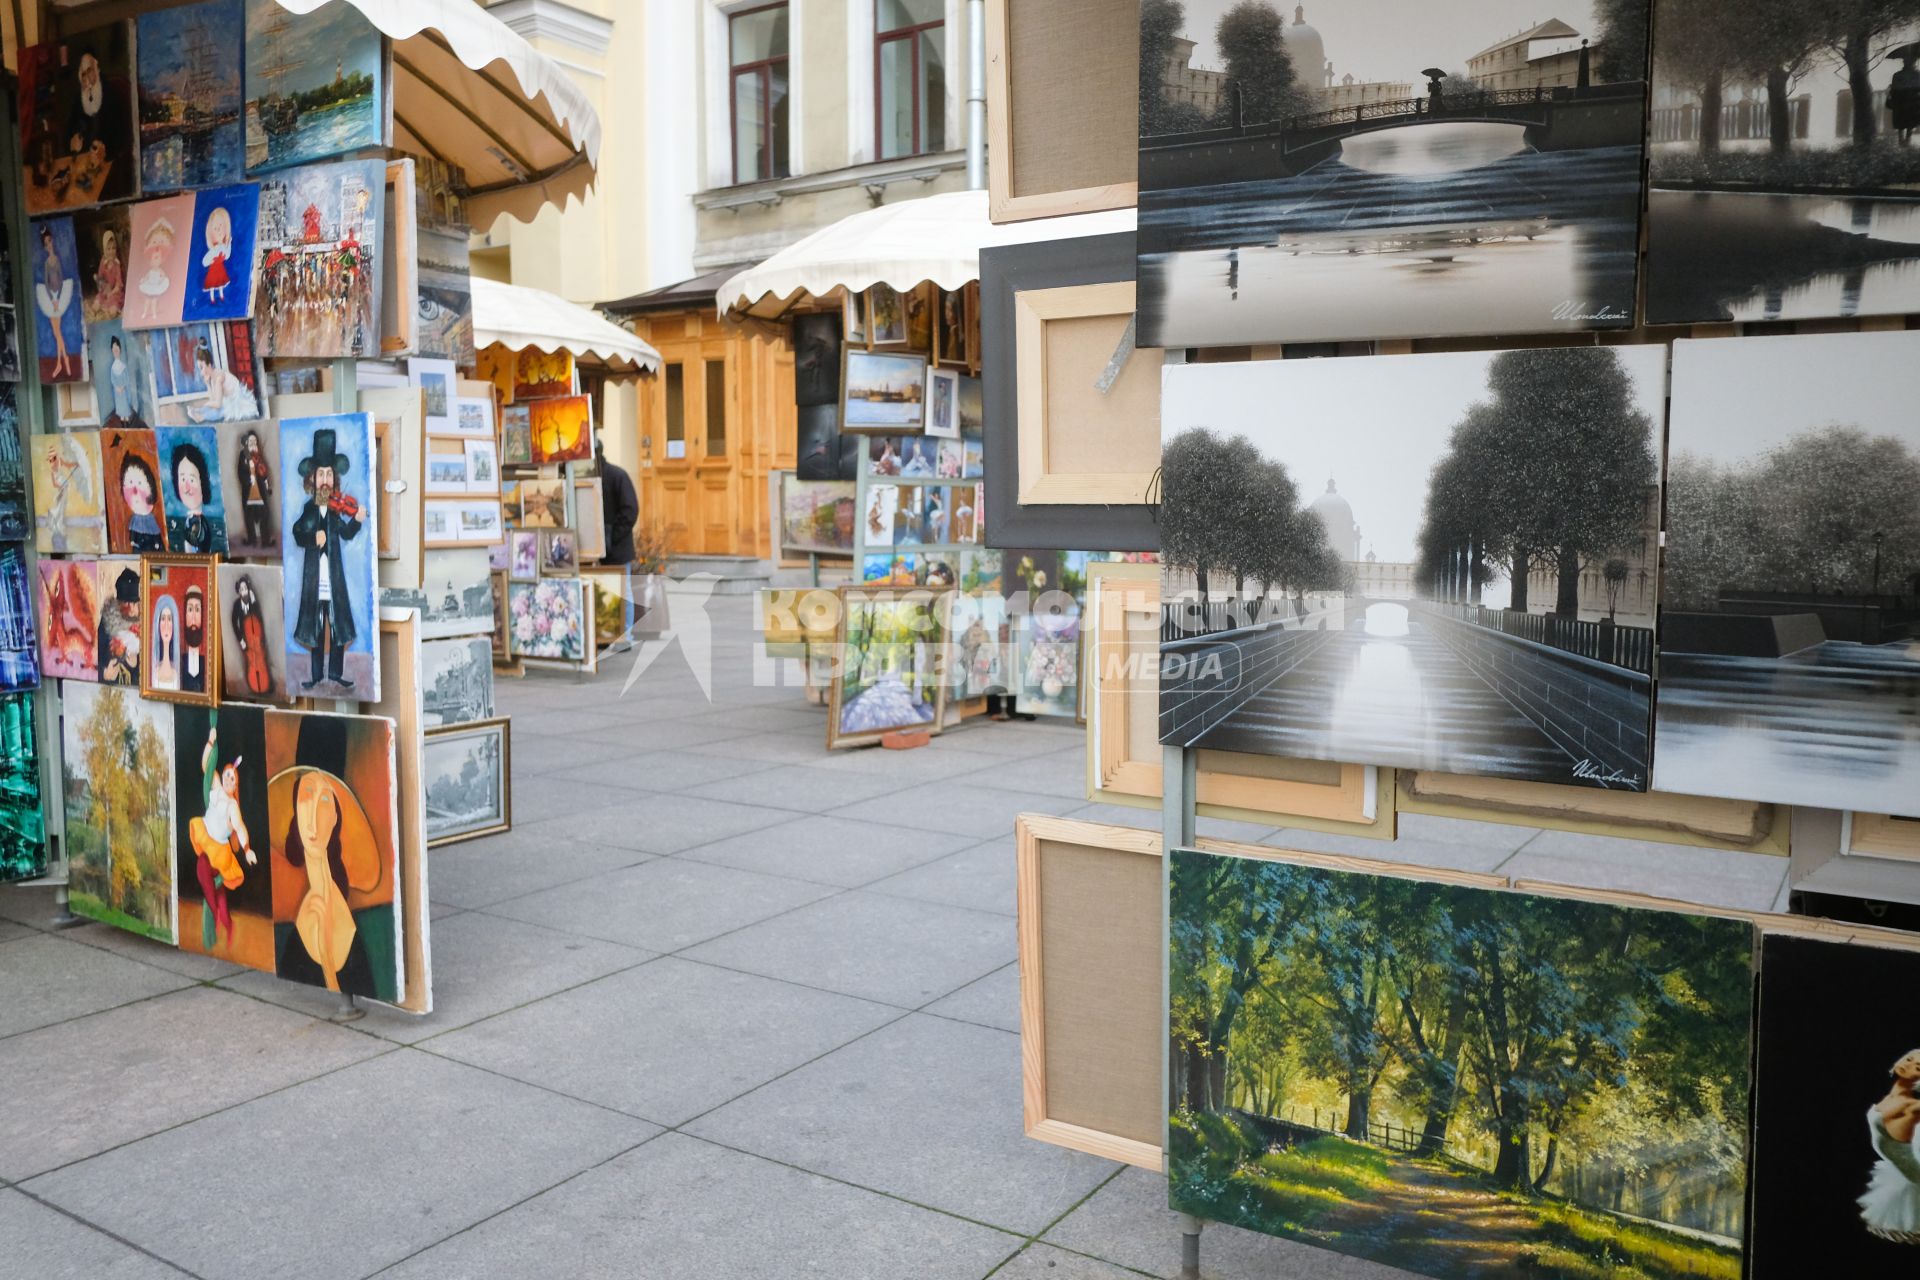 Санкт-Петербург. Продажа картин на улице.